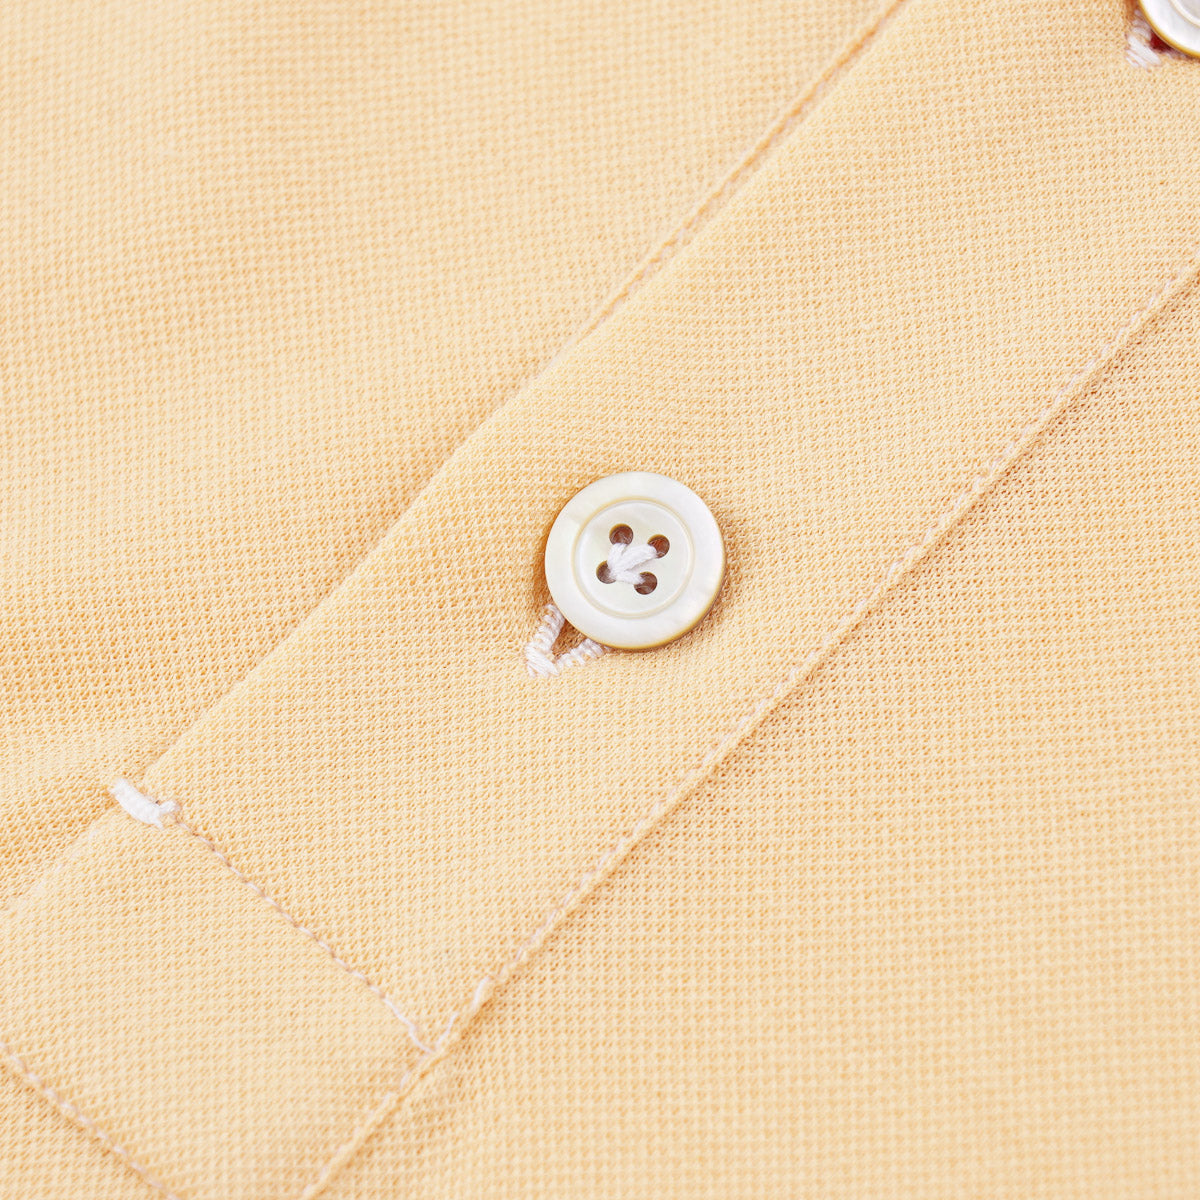 Kiton Lightweight Knit Polo Shirt - Top Shelf Apparel